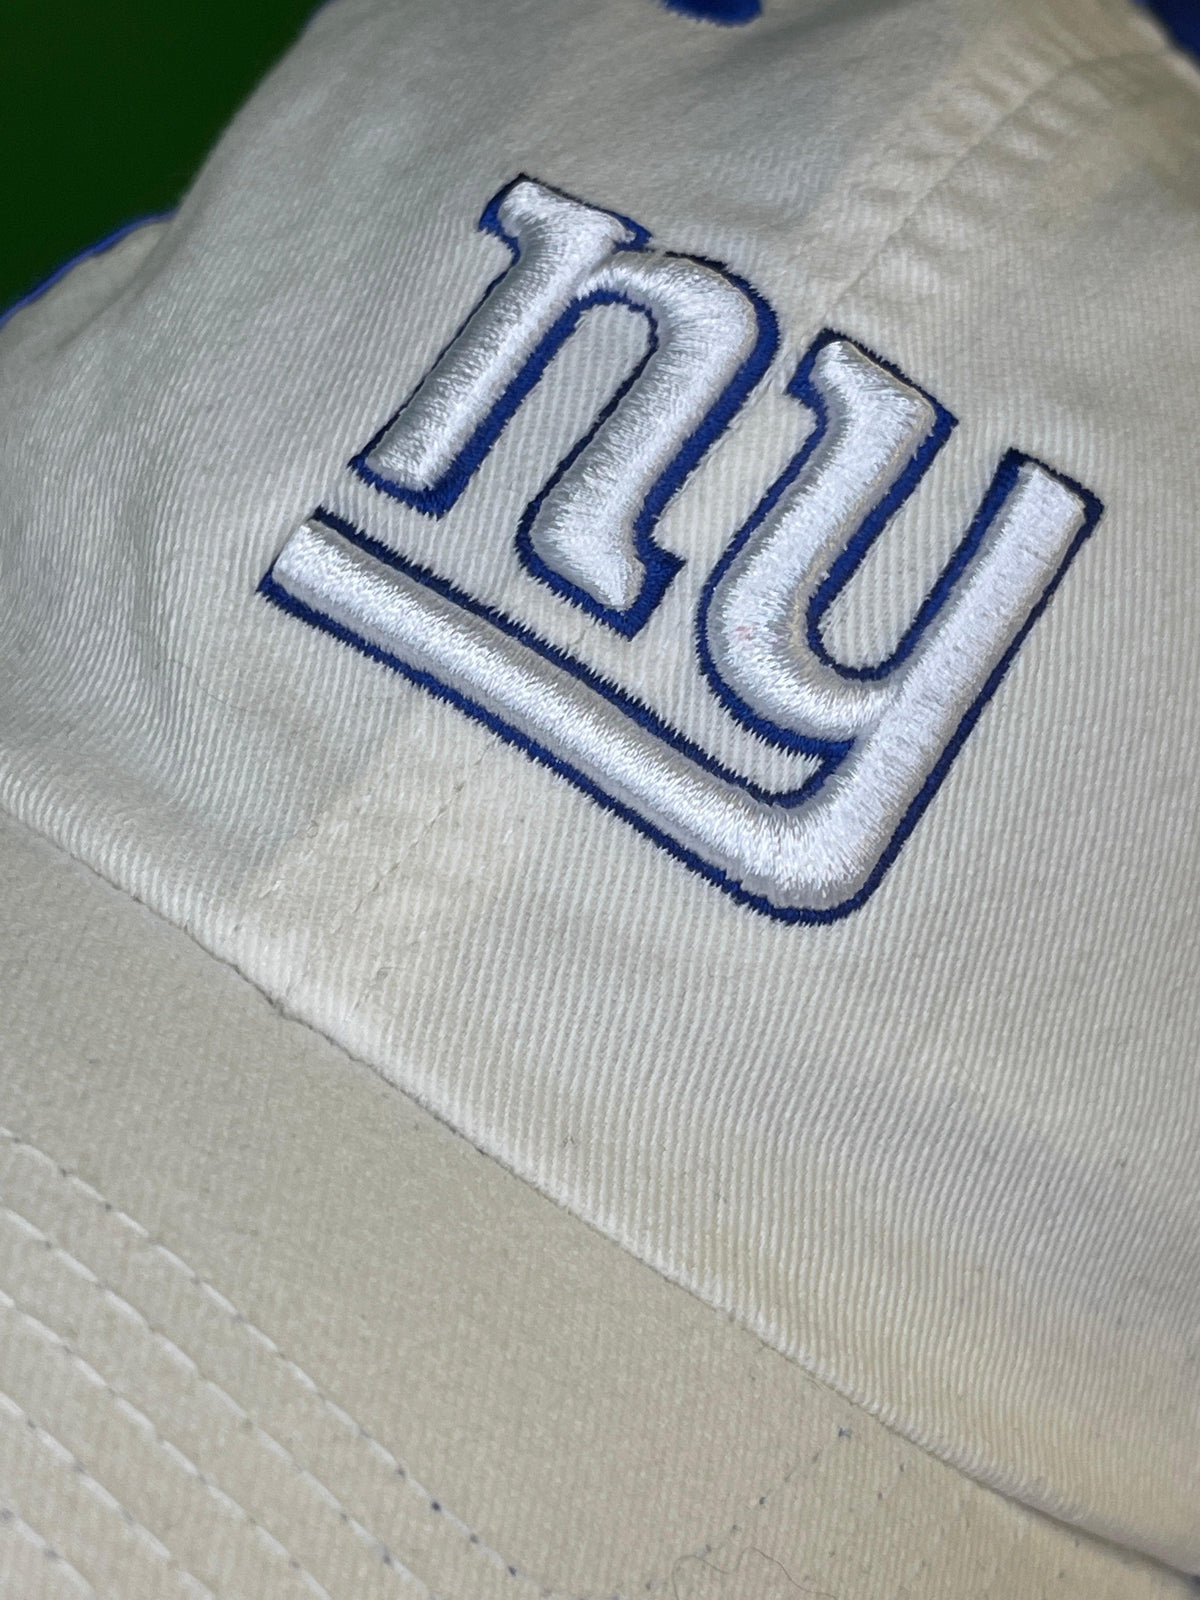 NFL New York Giants Reebok Cotton/Spandex Baseball Hat/Cap Medium/Large